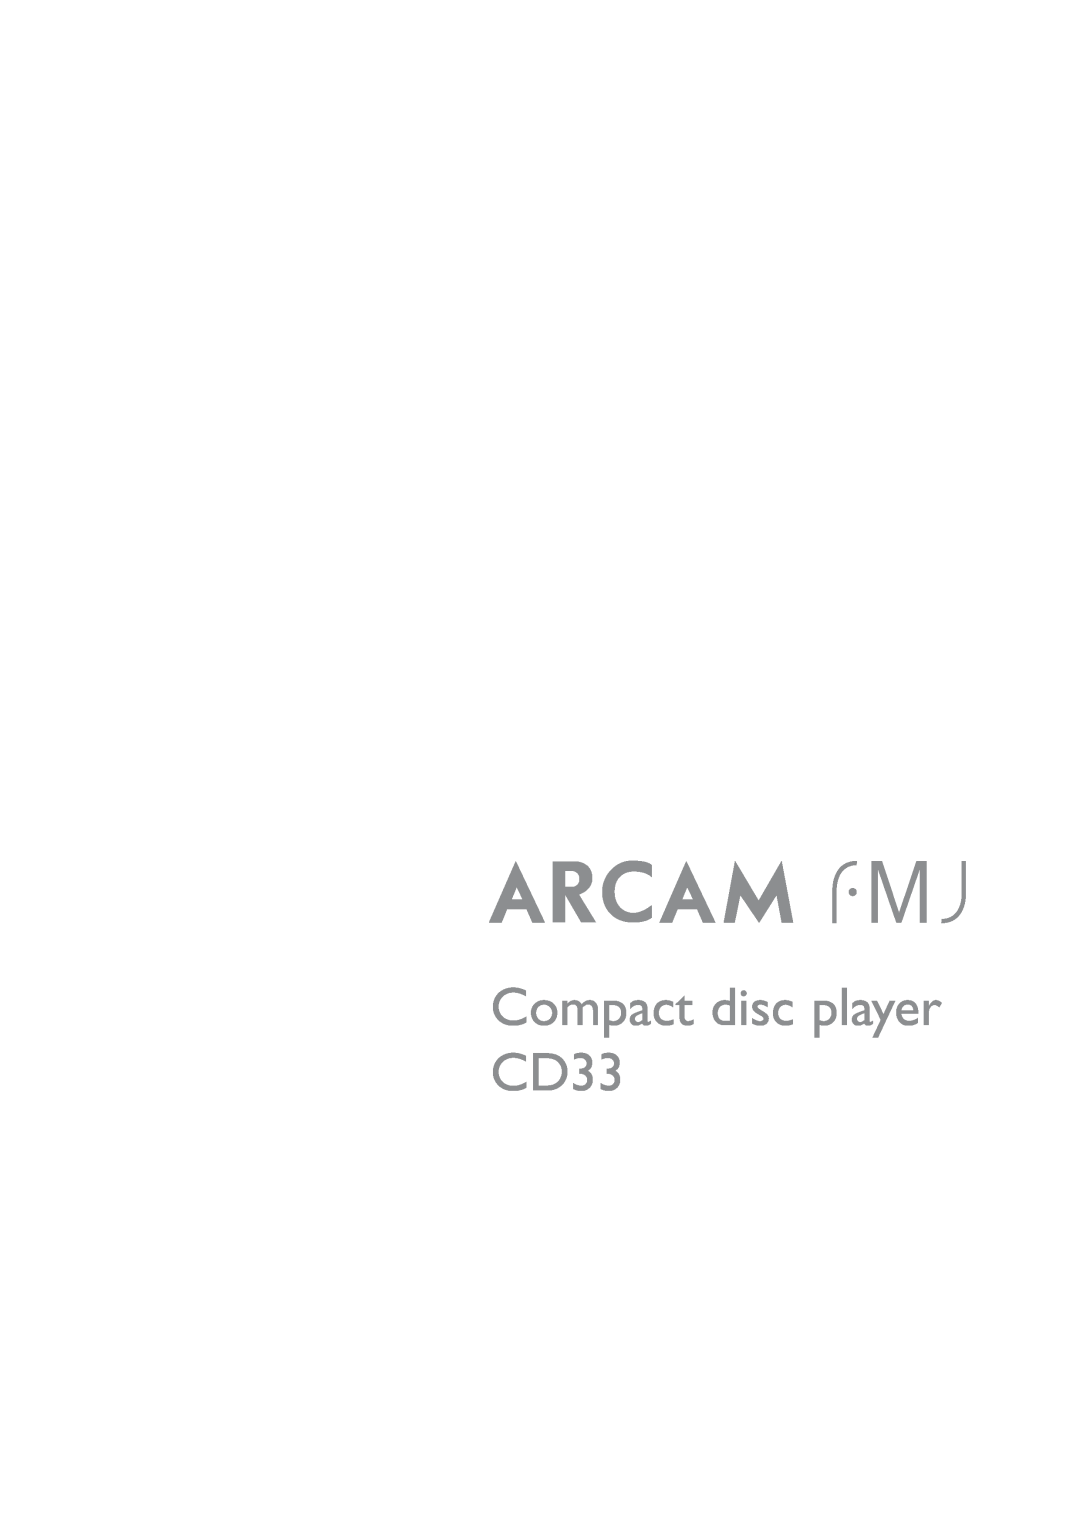 Arcam manual Compact disc player CD33 